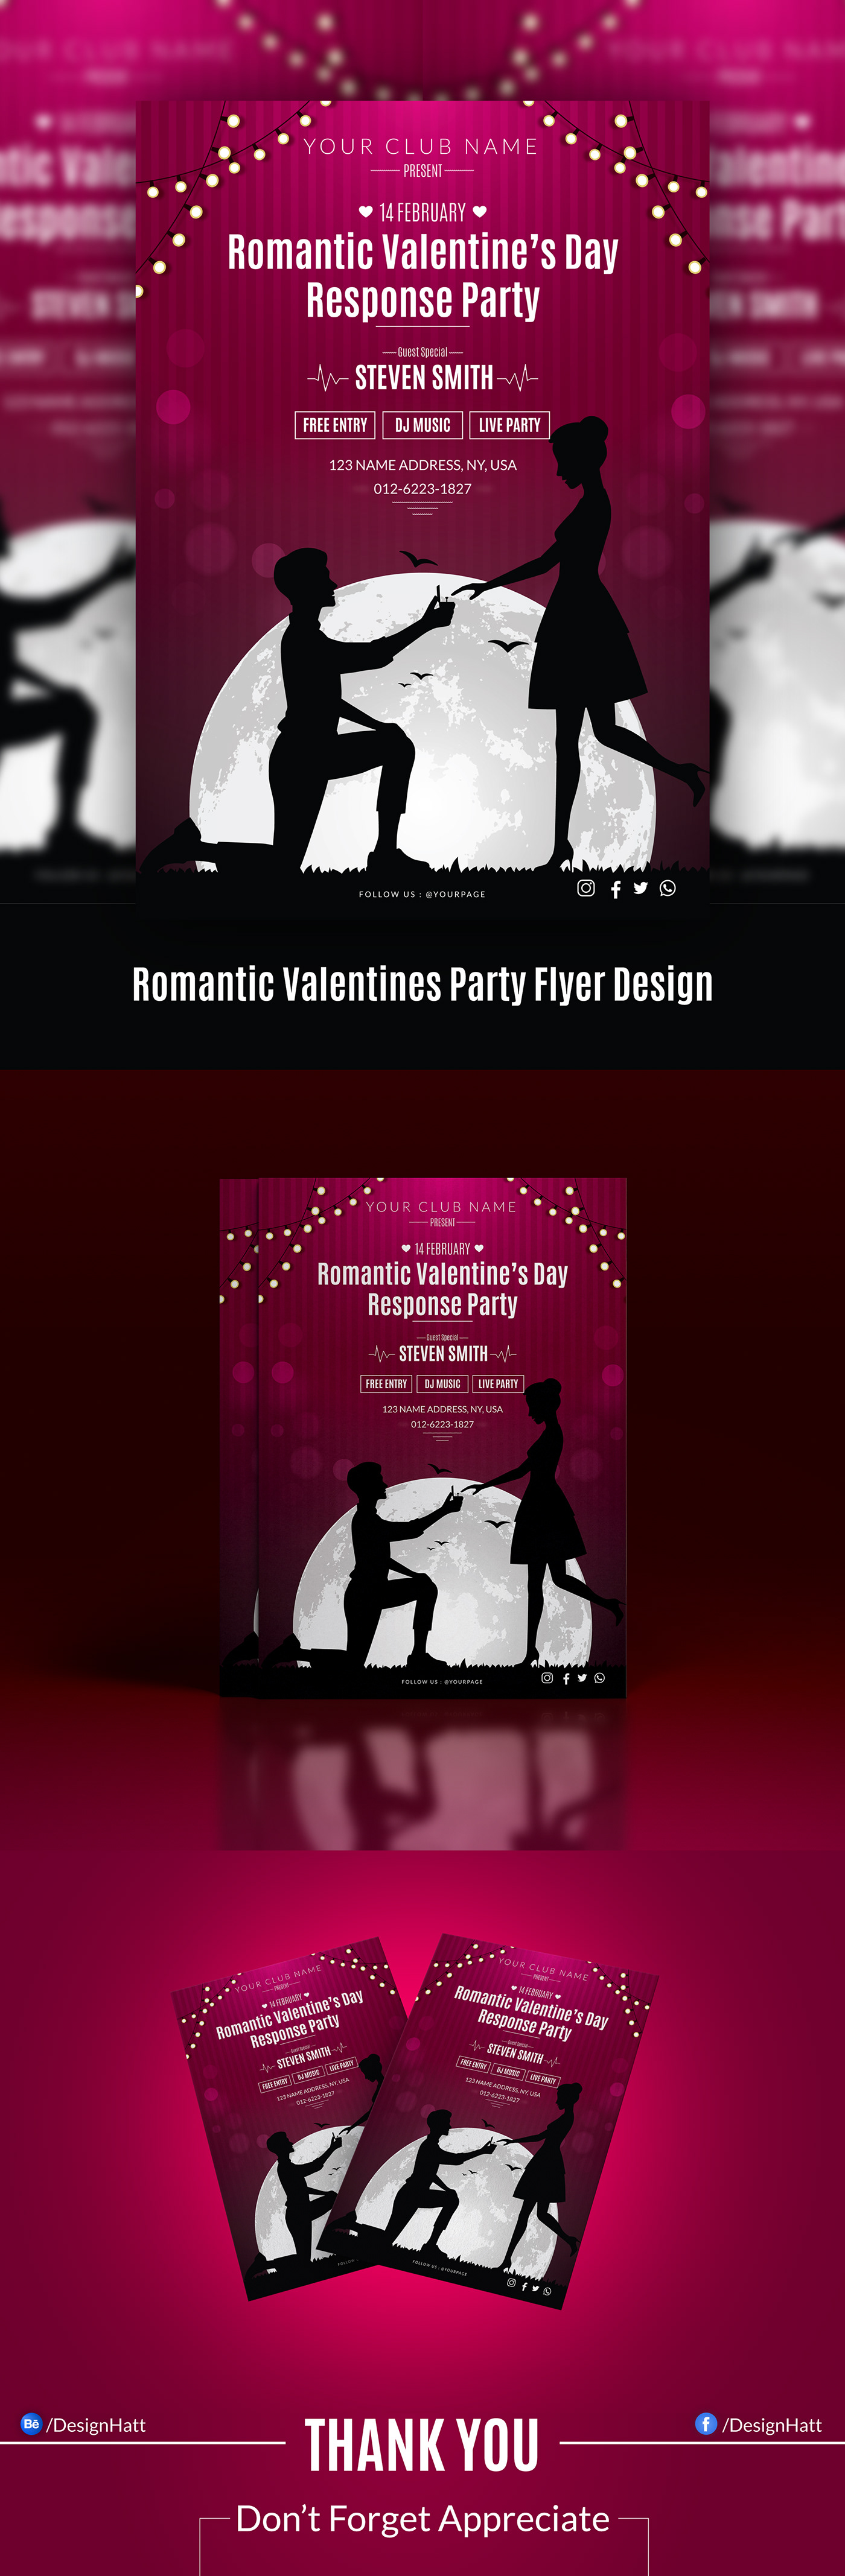 14 february Flyer Design party flyer romantic party flyer valentines day Valentines Flyer